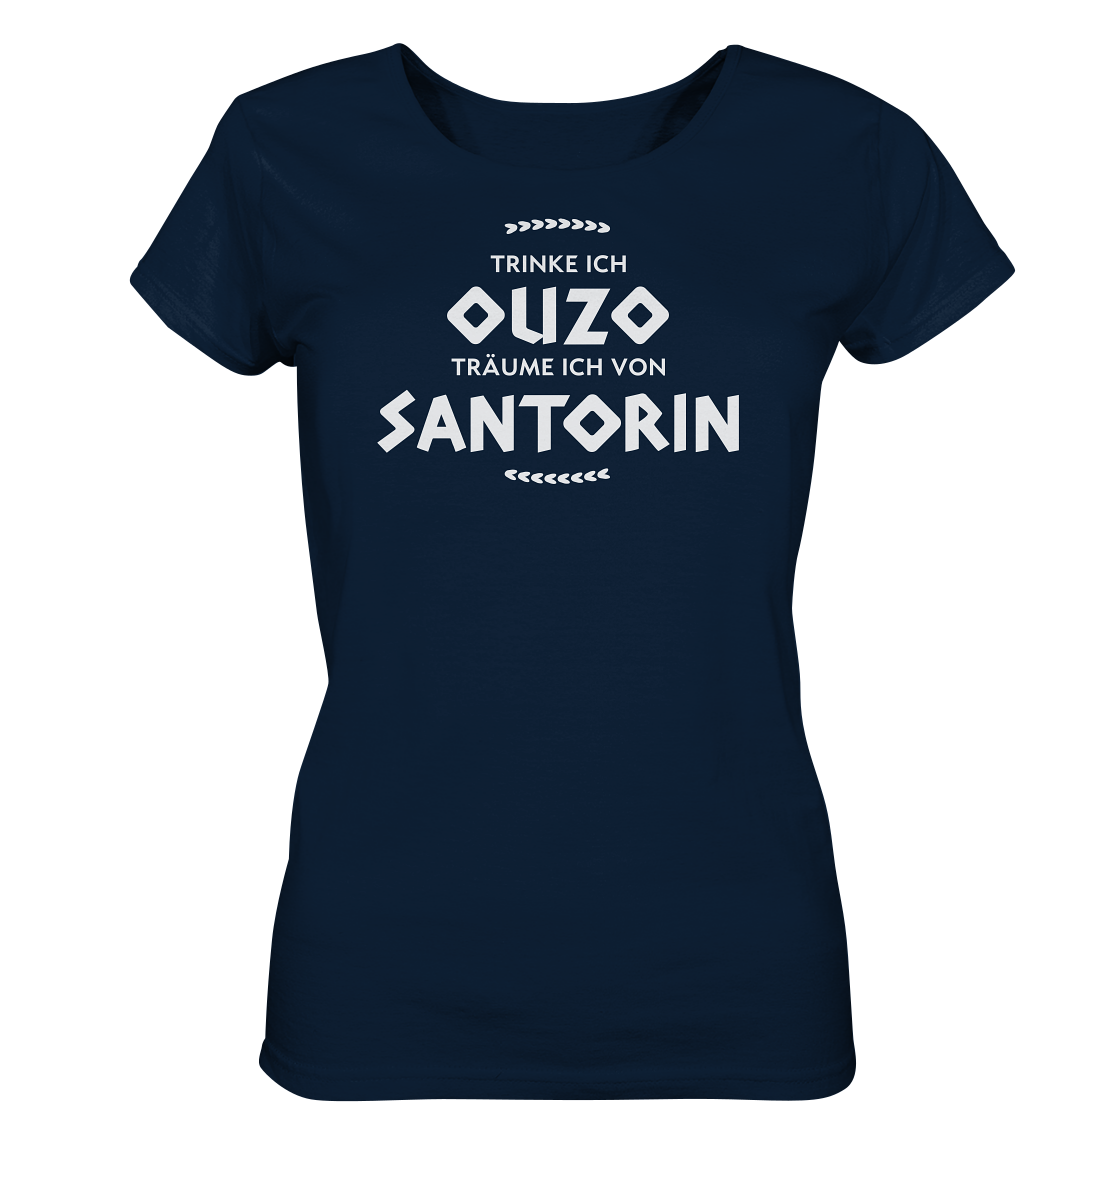 When I drink Ouzo I dream of Santorini - Ladies Organic Shirt